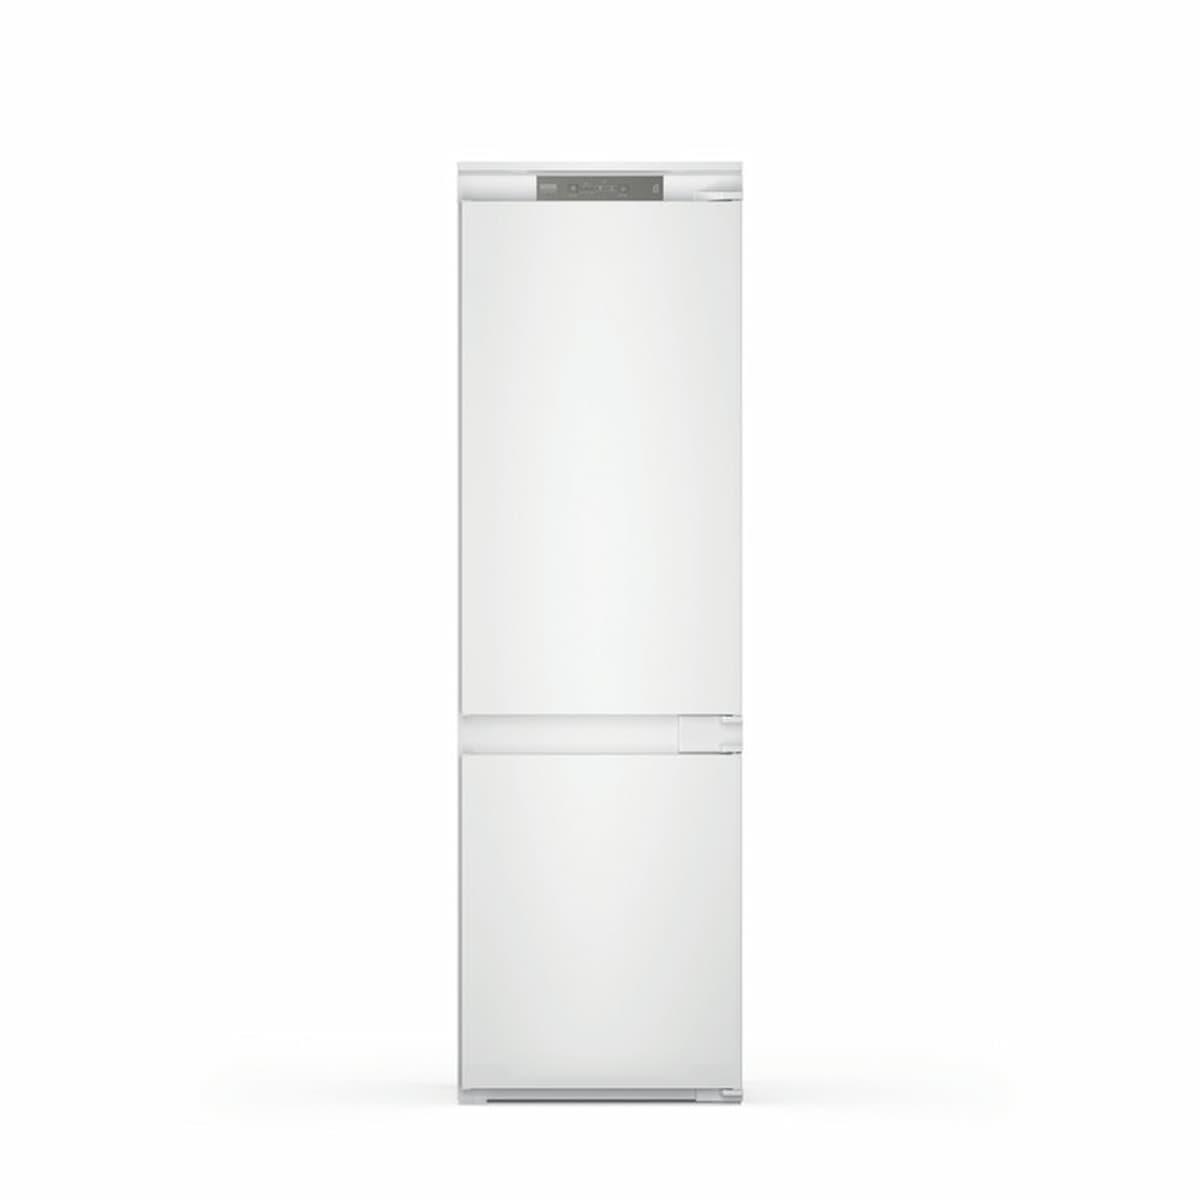 Whirlpool, 55cm, frost free integrated fridge freezer WHC18T332PUK - Peter Murphy Lighting & Electrical Ltd